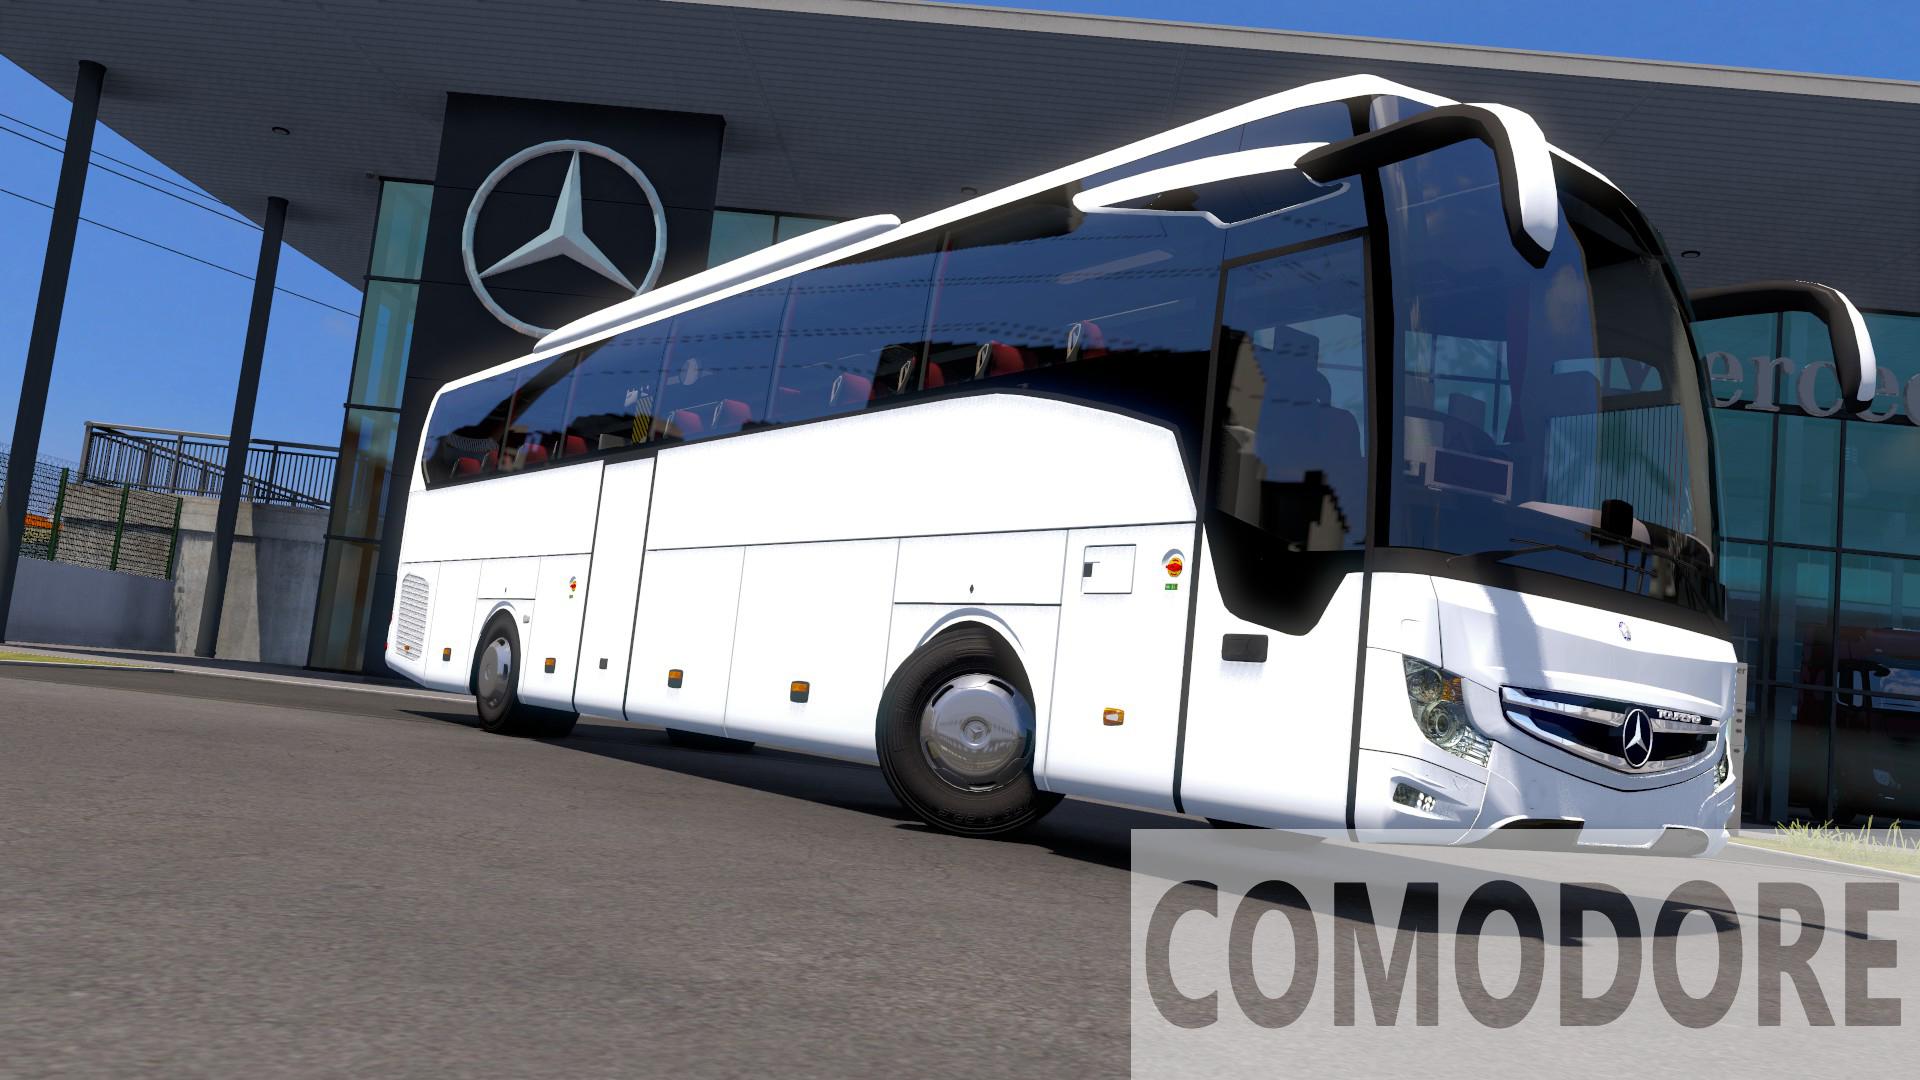 bus simulator 16 mods